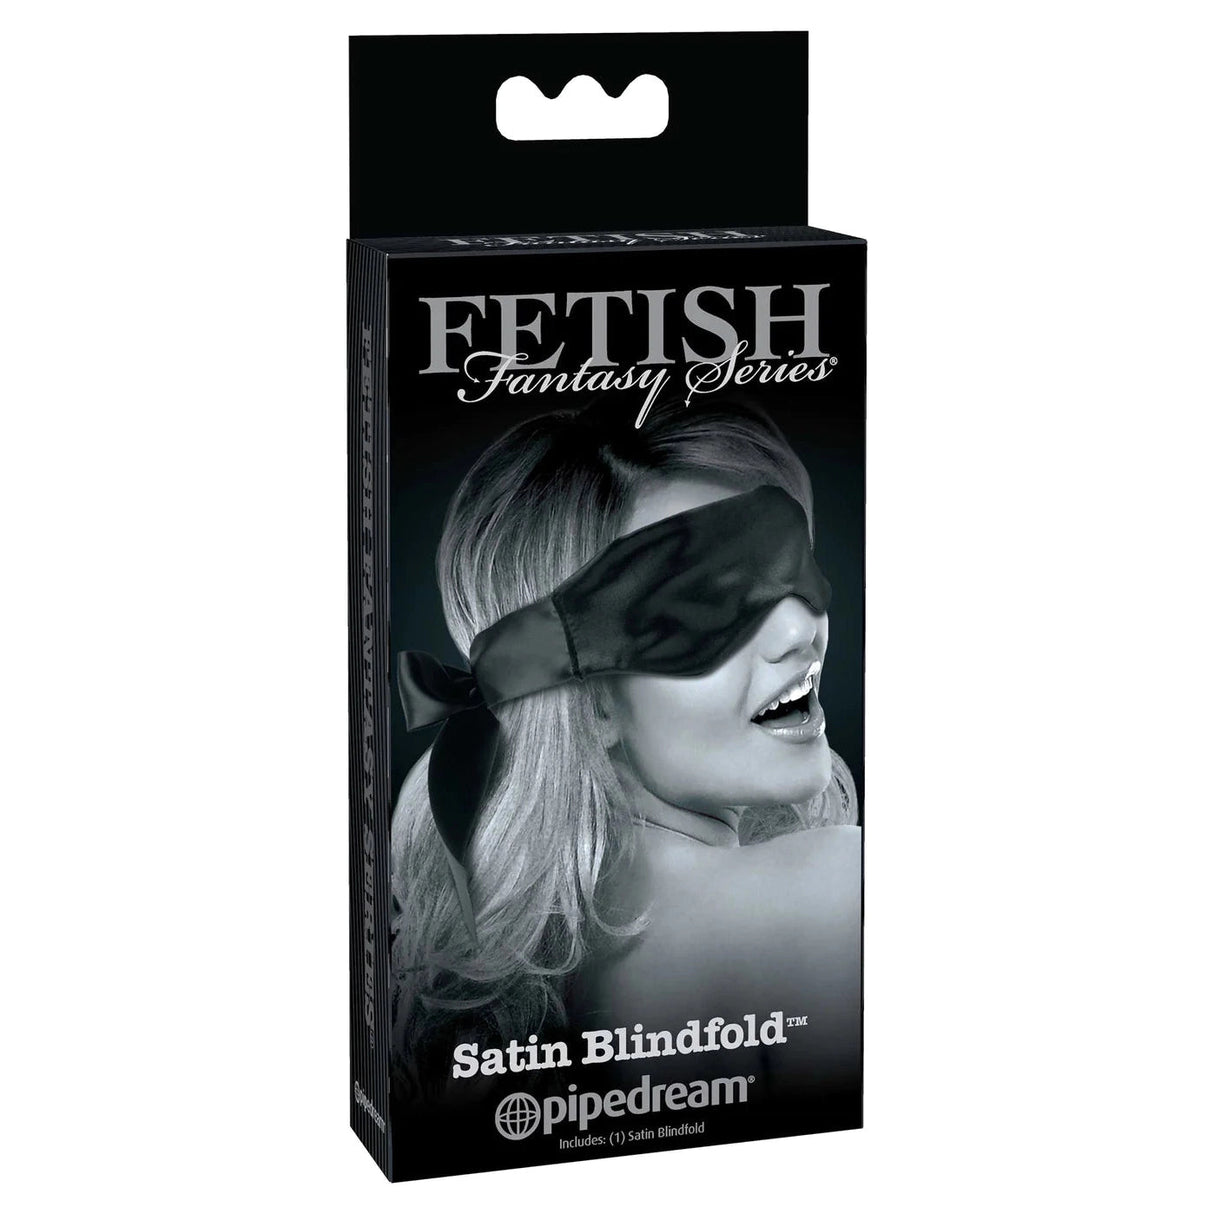 Fetish Fantasy Series Limited Edition Satin Blindfold